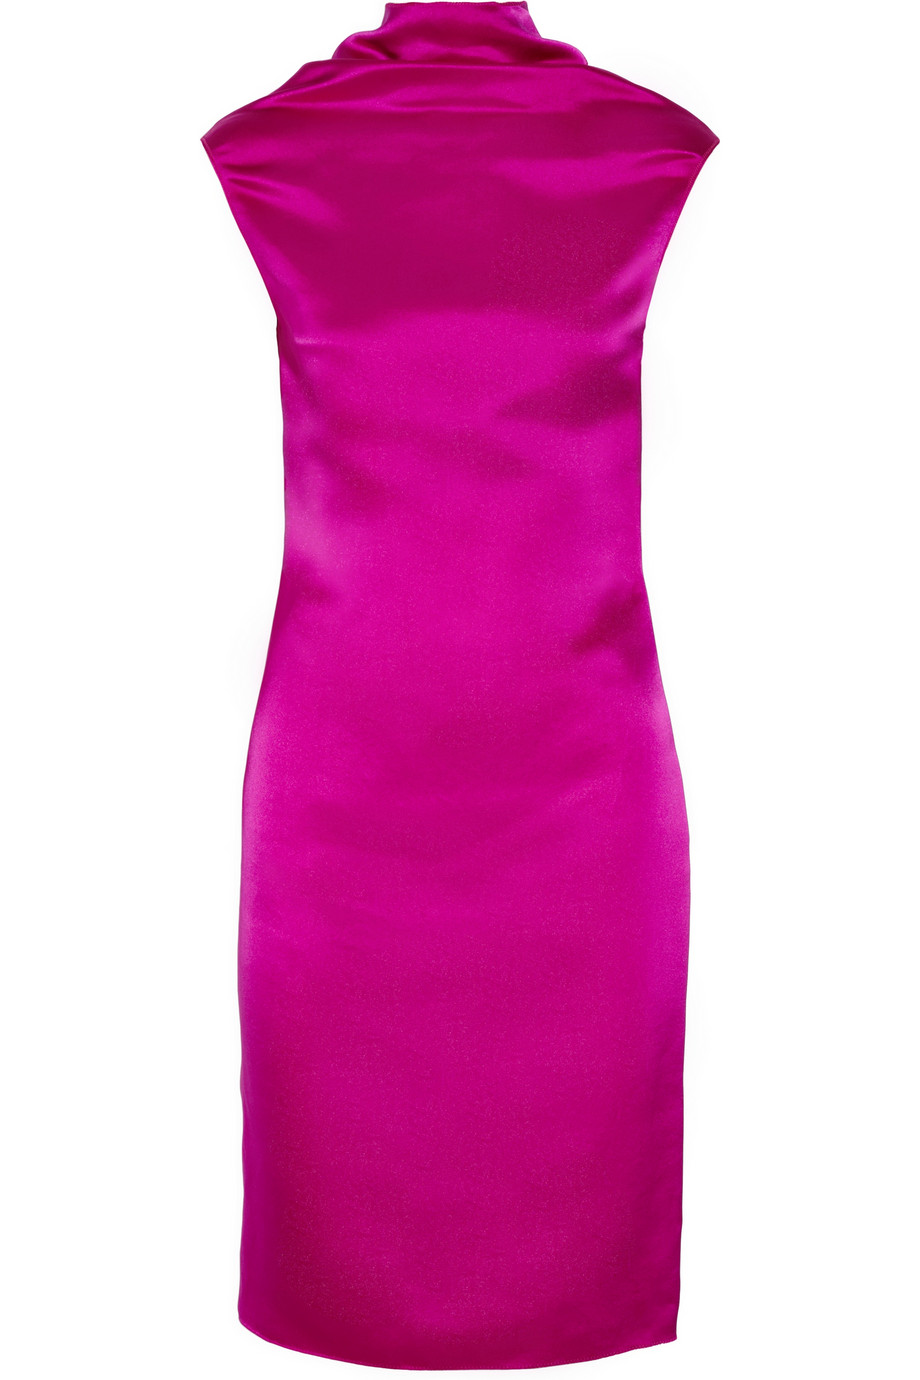 Lyst - Lanvin Washed Duchess Silk Satin Dress in Purple